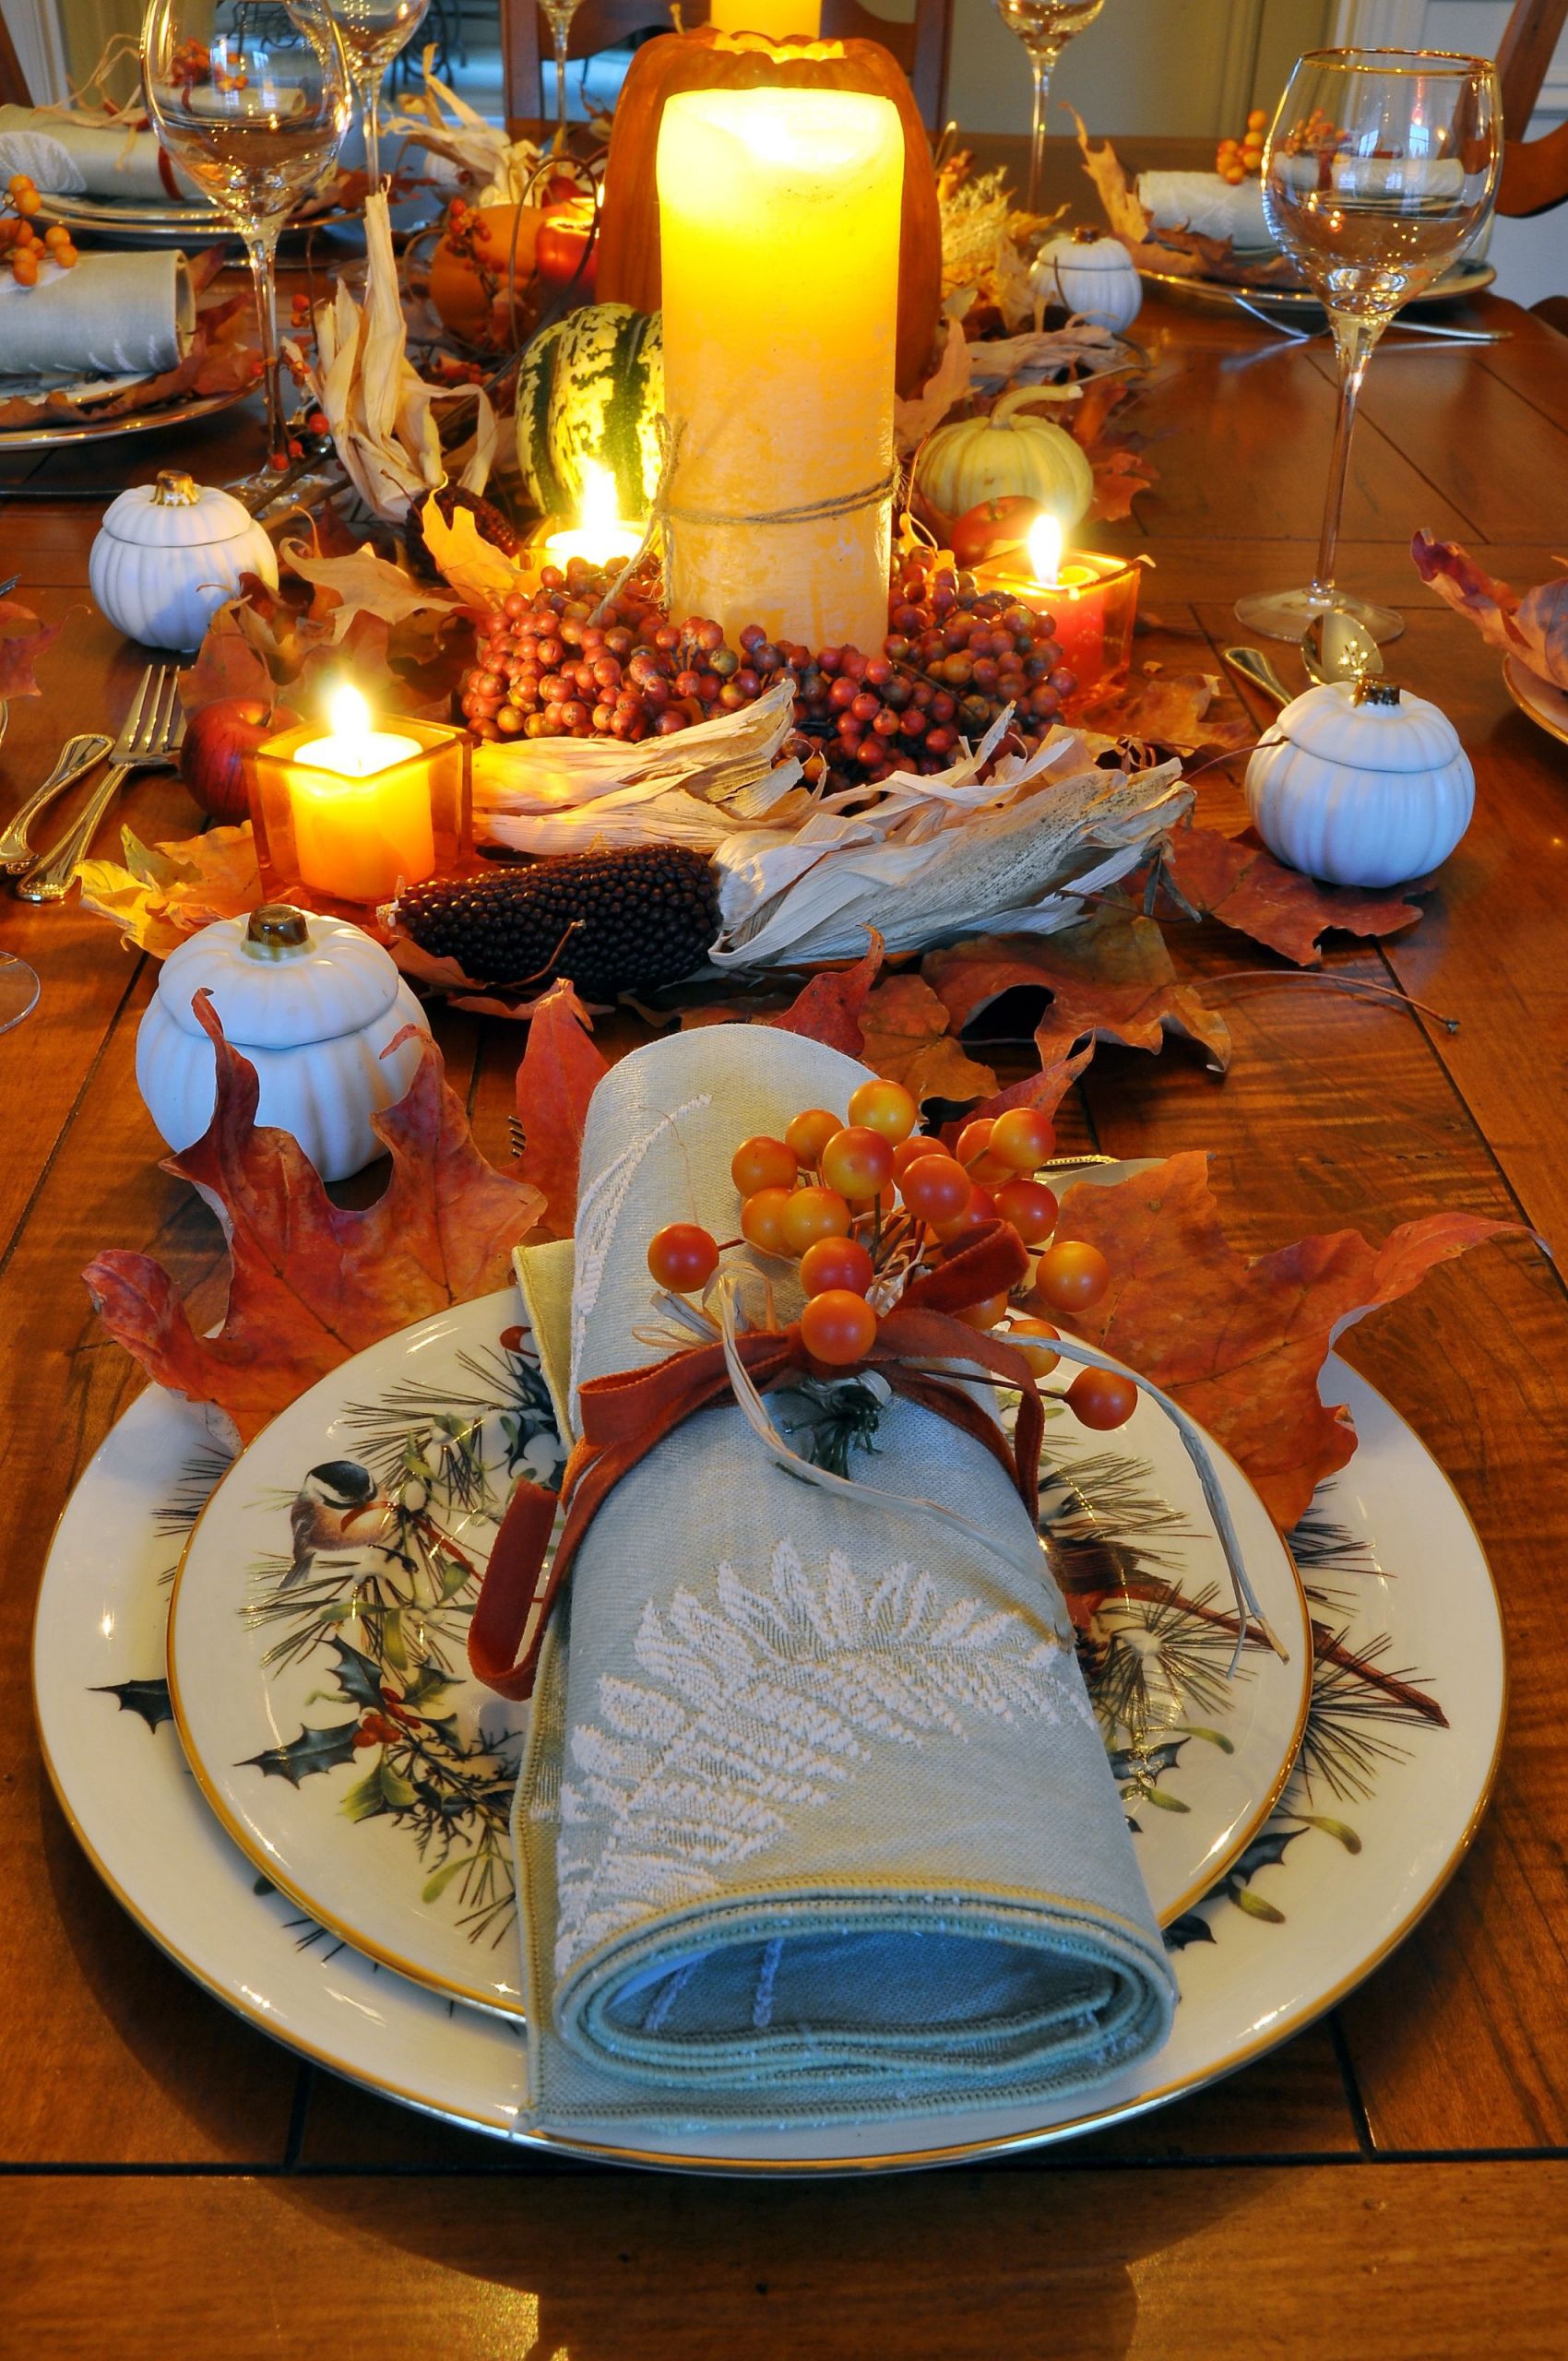 Thanksgiving Table Decorations Pinterest
 Thanksgiving table decorations